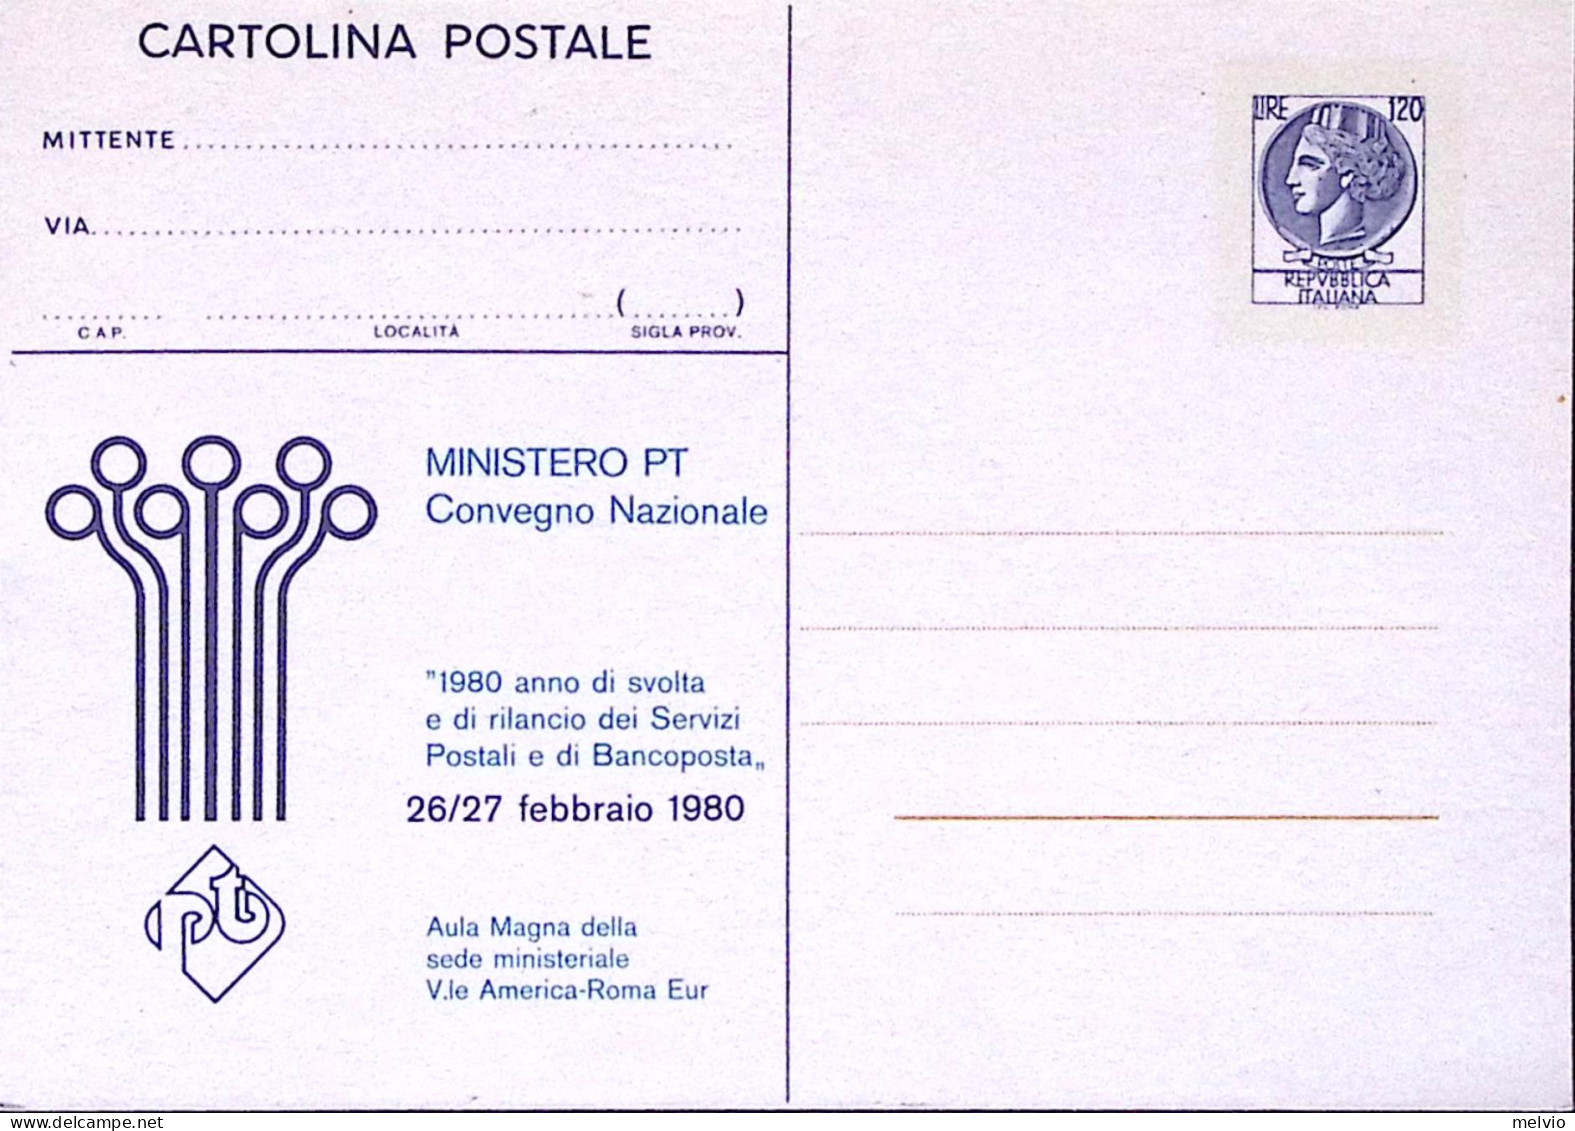 1980-Cartolina Postale Convegno Servizi Postali Lire 120 Nuova - Interi Postali